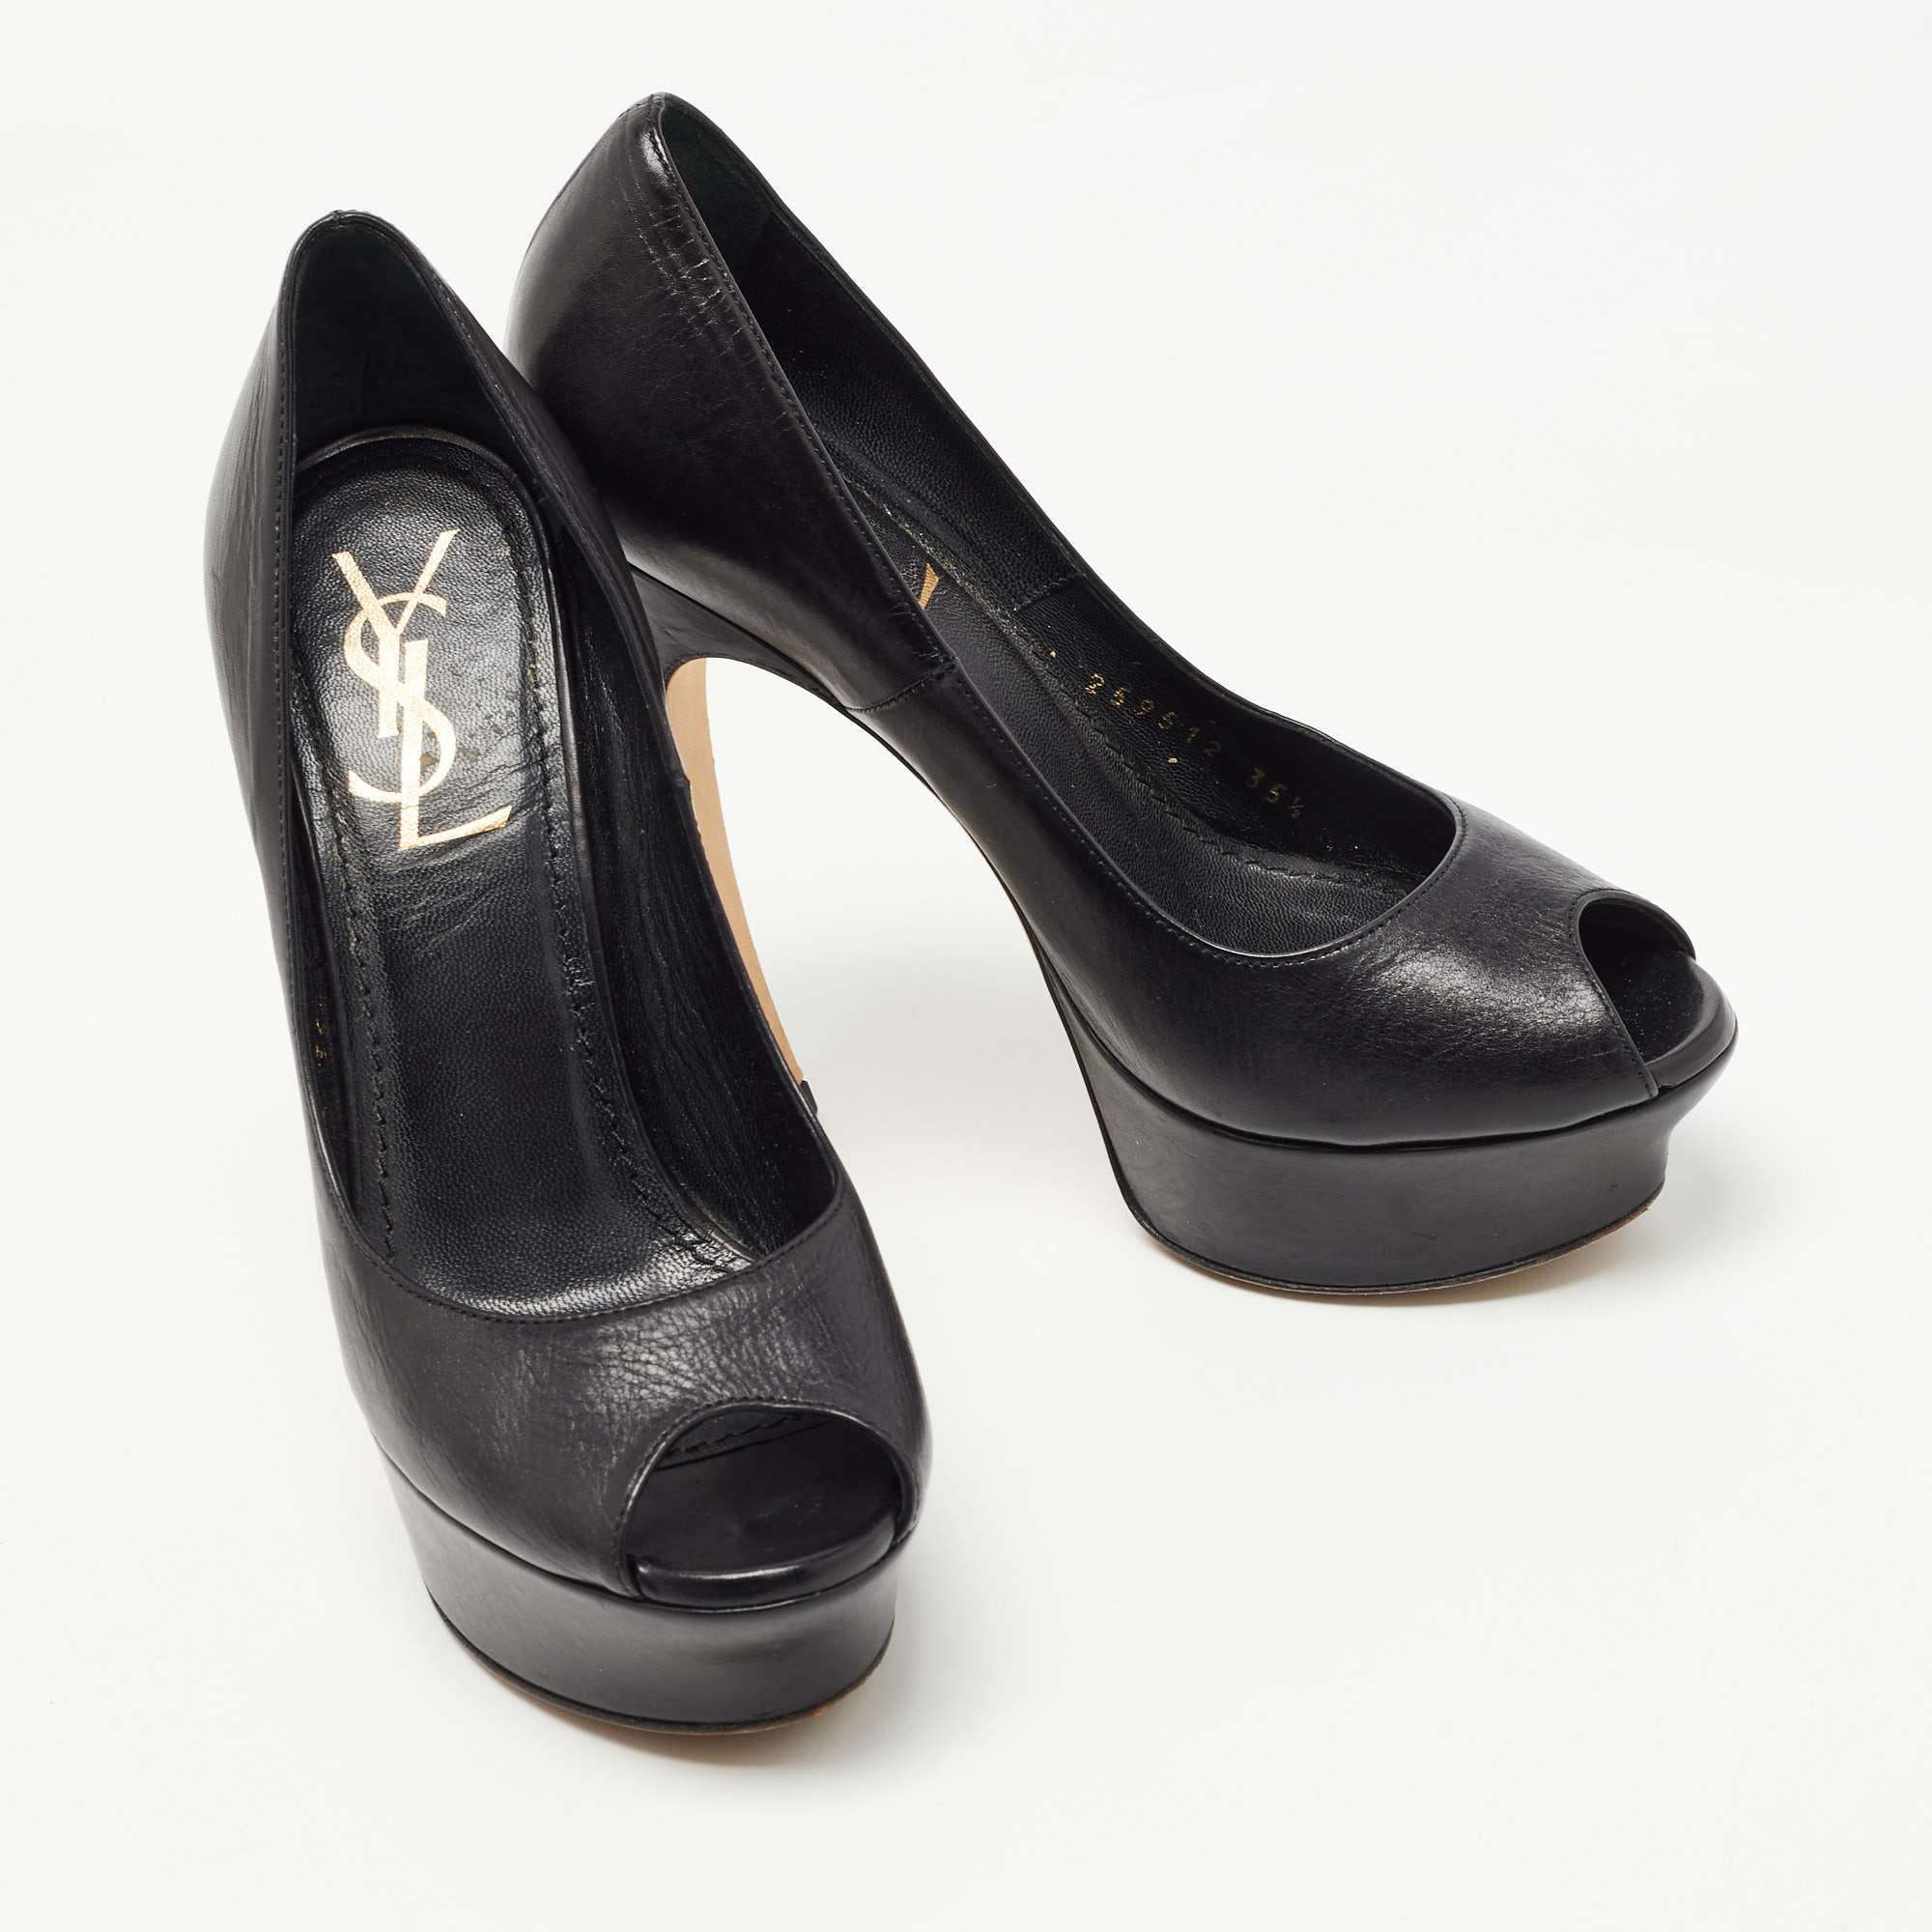 Yves Saint Laurent Black Leather Peep Toe Pumps Size 35.5